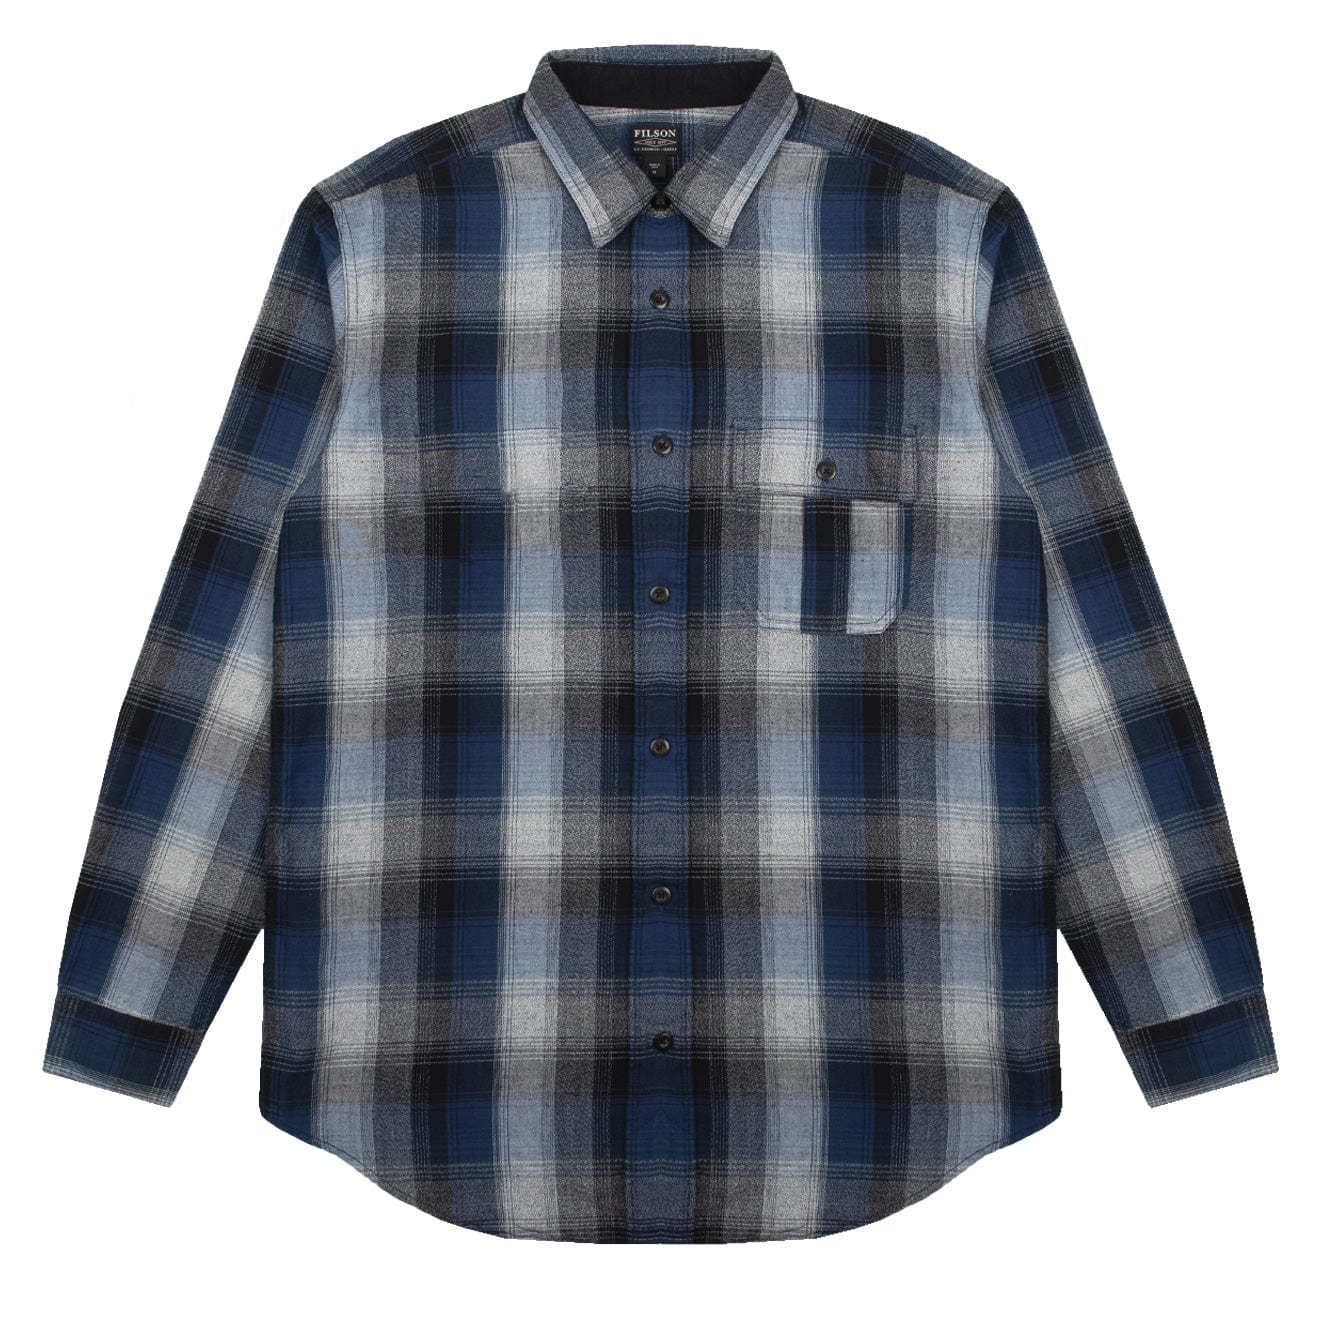 Filson Rustic Oxford Shirt Indigo / Black / Charcoal | The Sporting Lodge